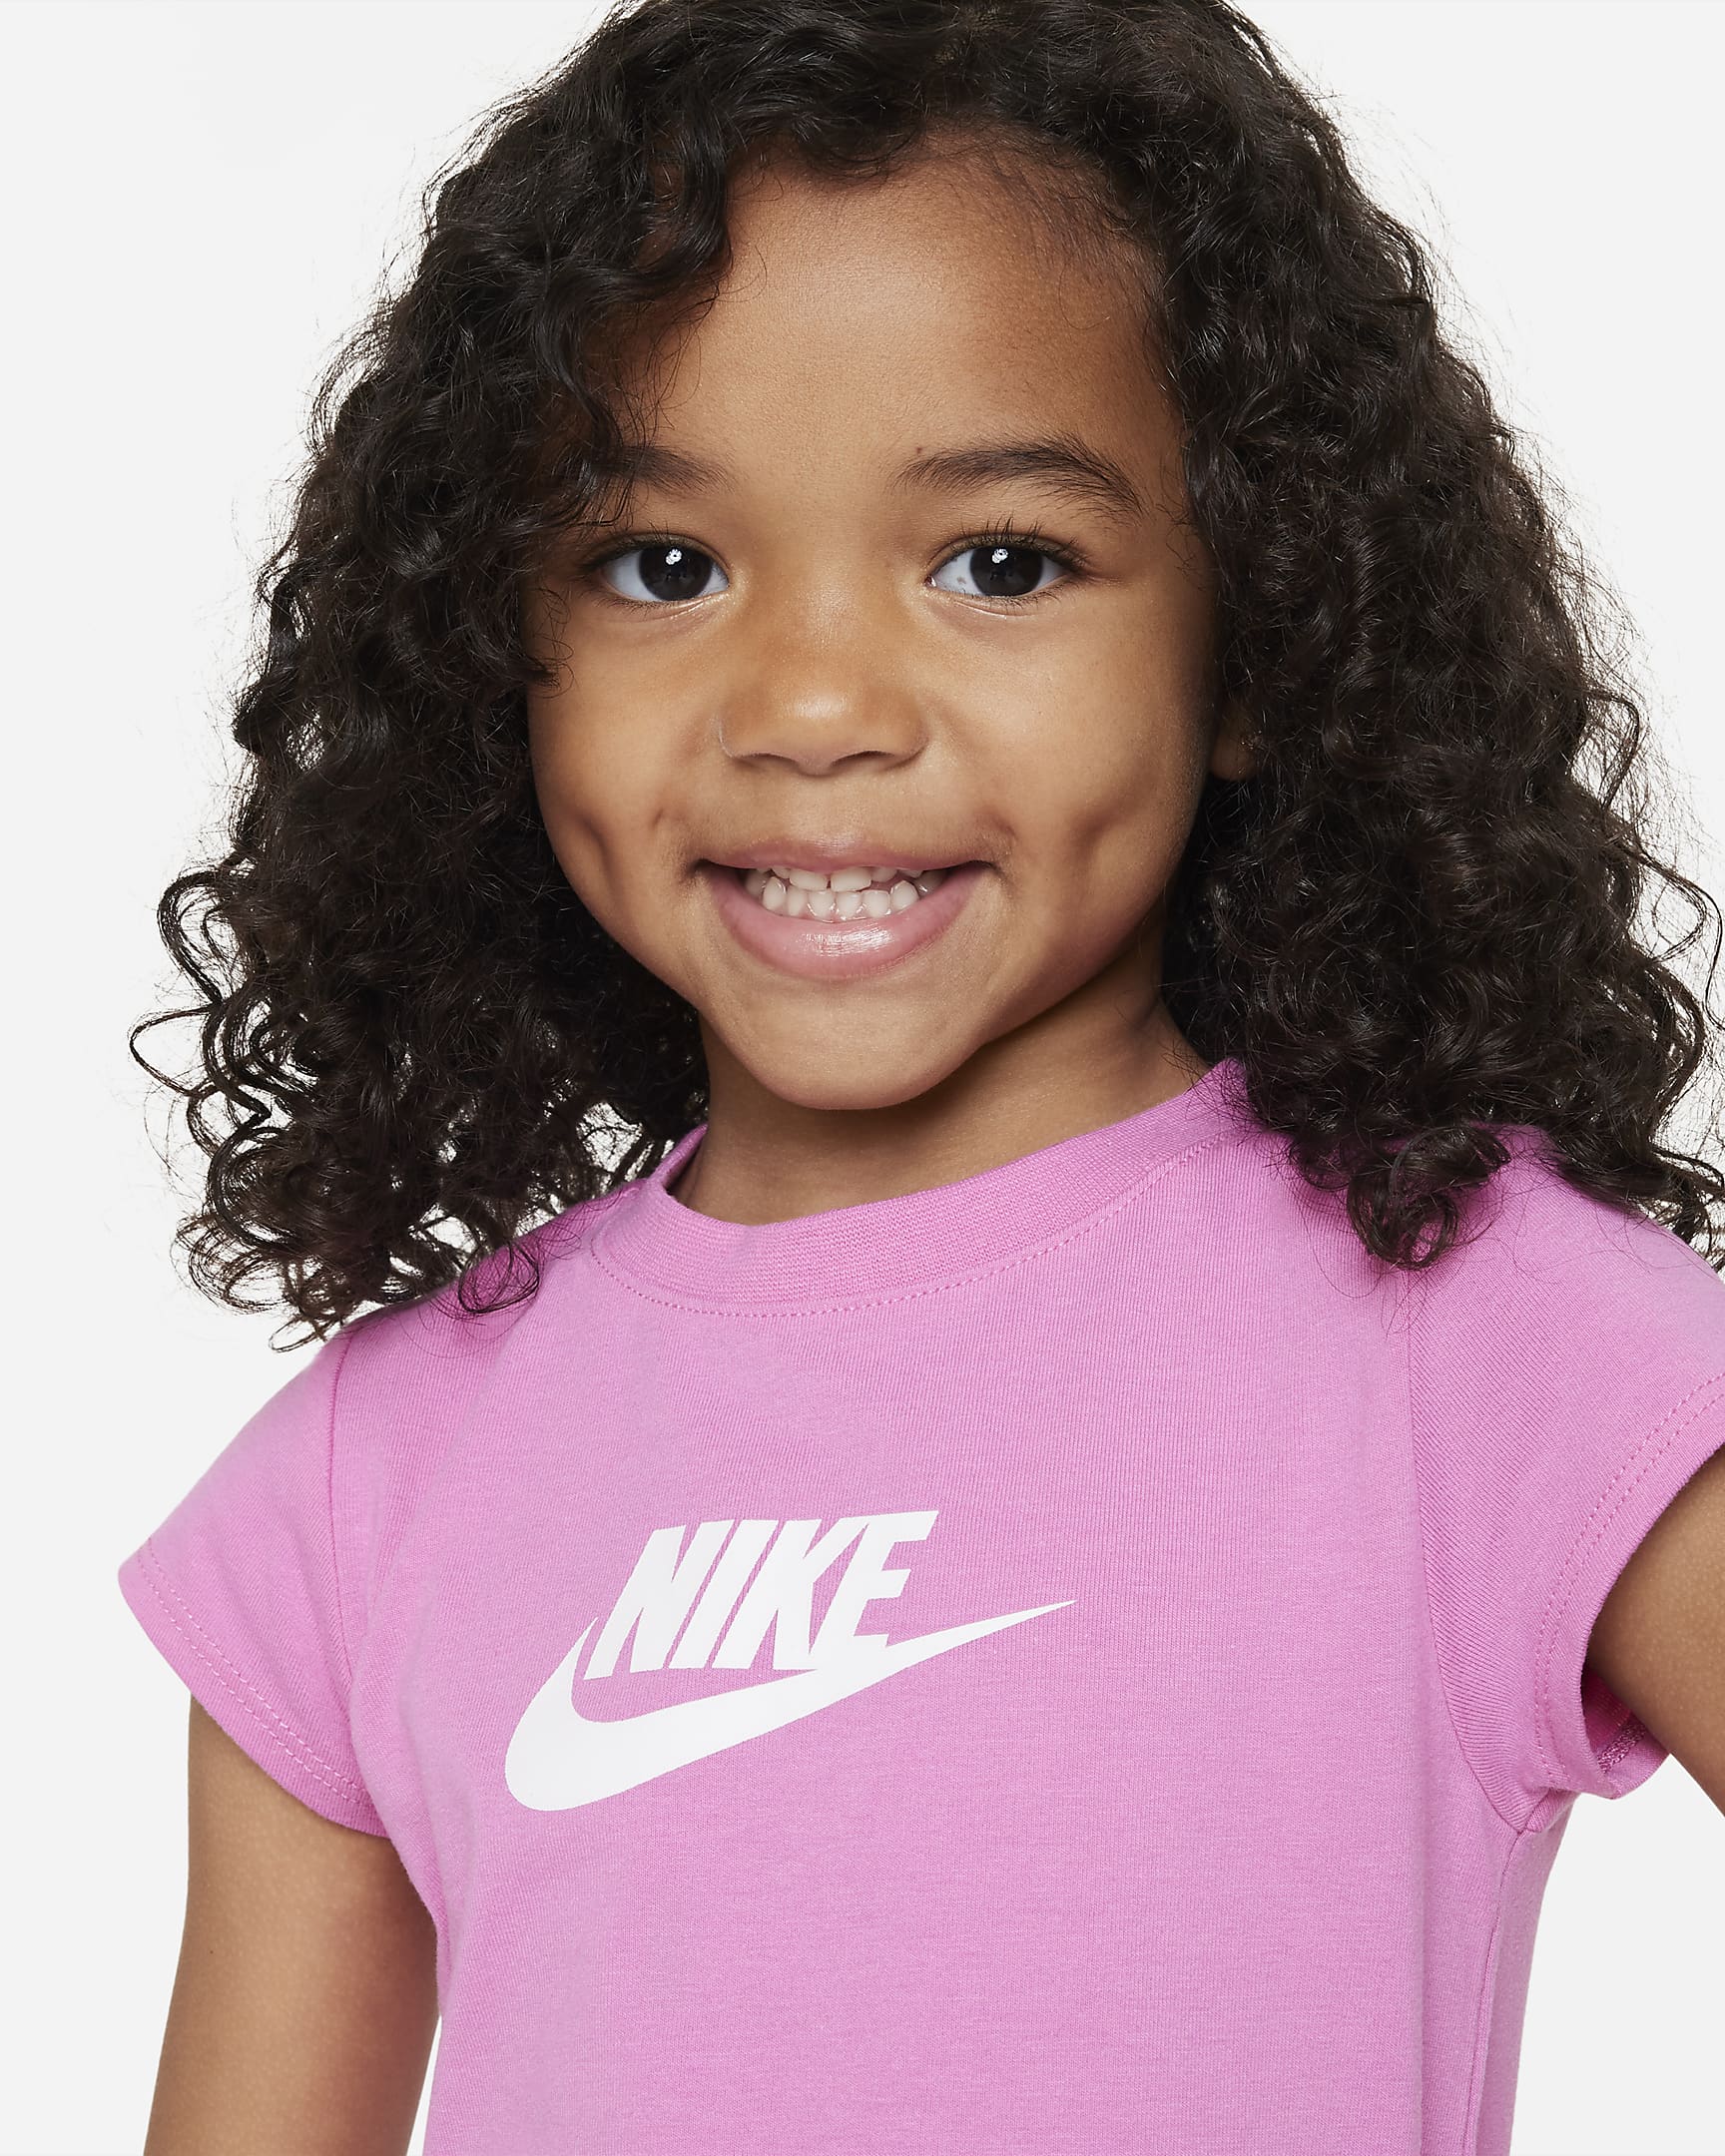 Nike Little Kids' Dress. Nike.com